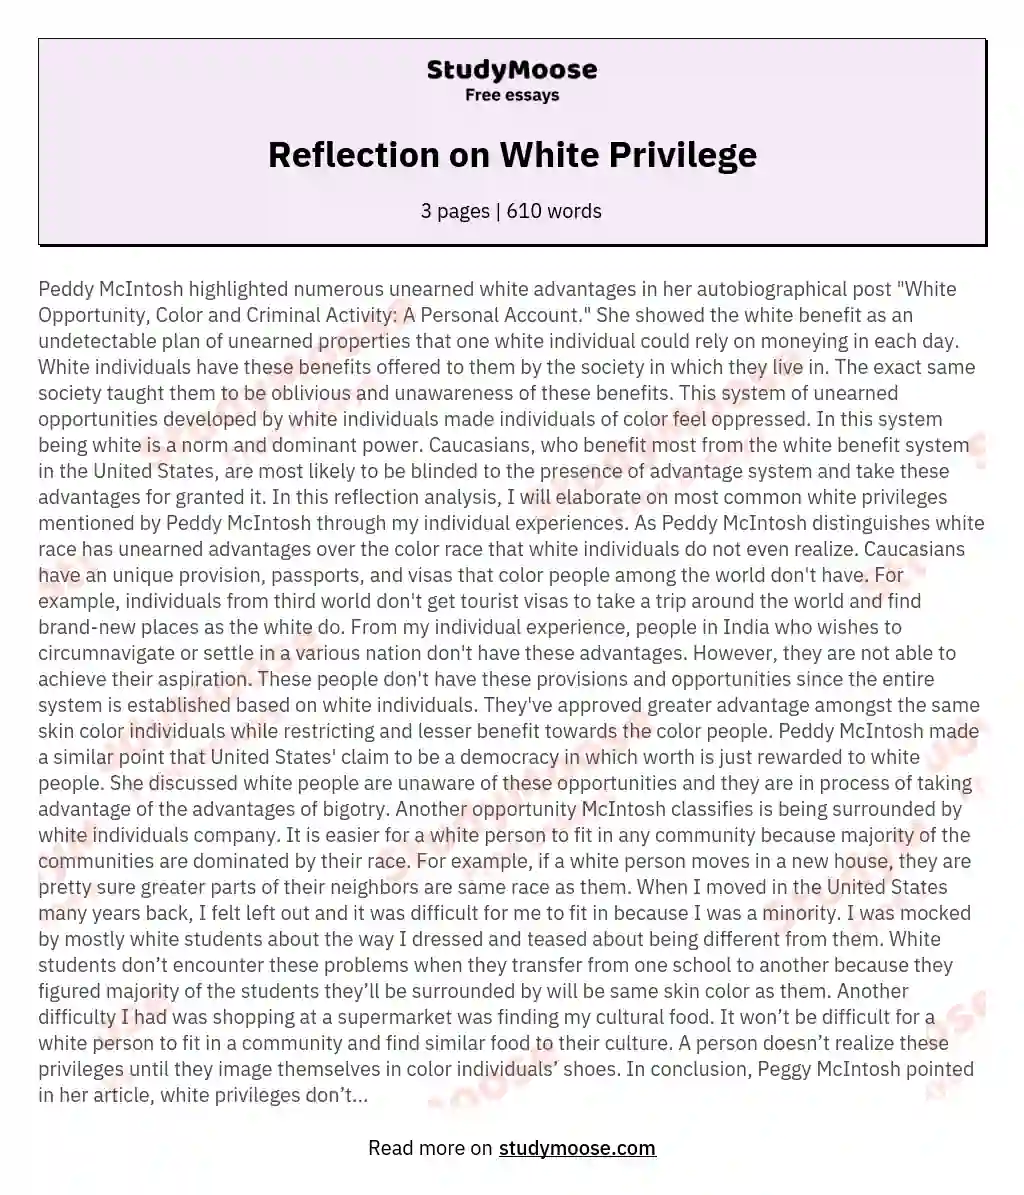 Reflection on White Privilege essay